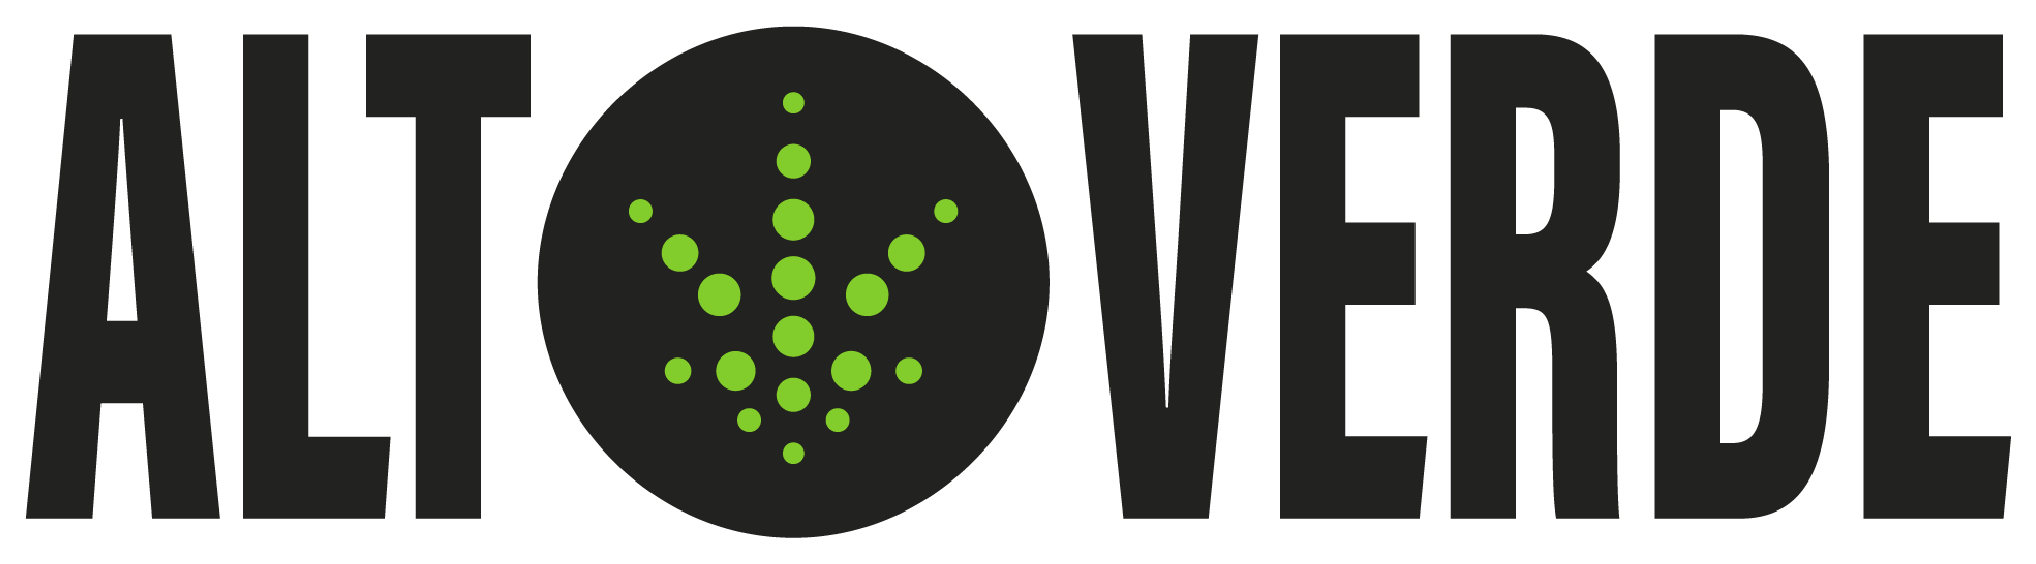 AltoVerde Logo